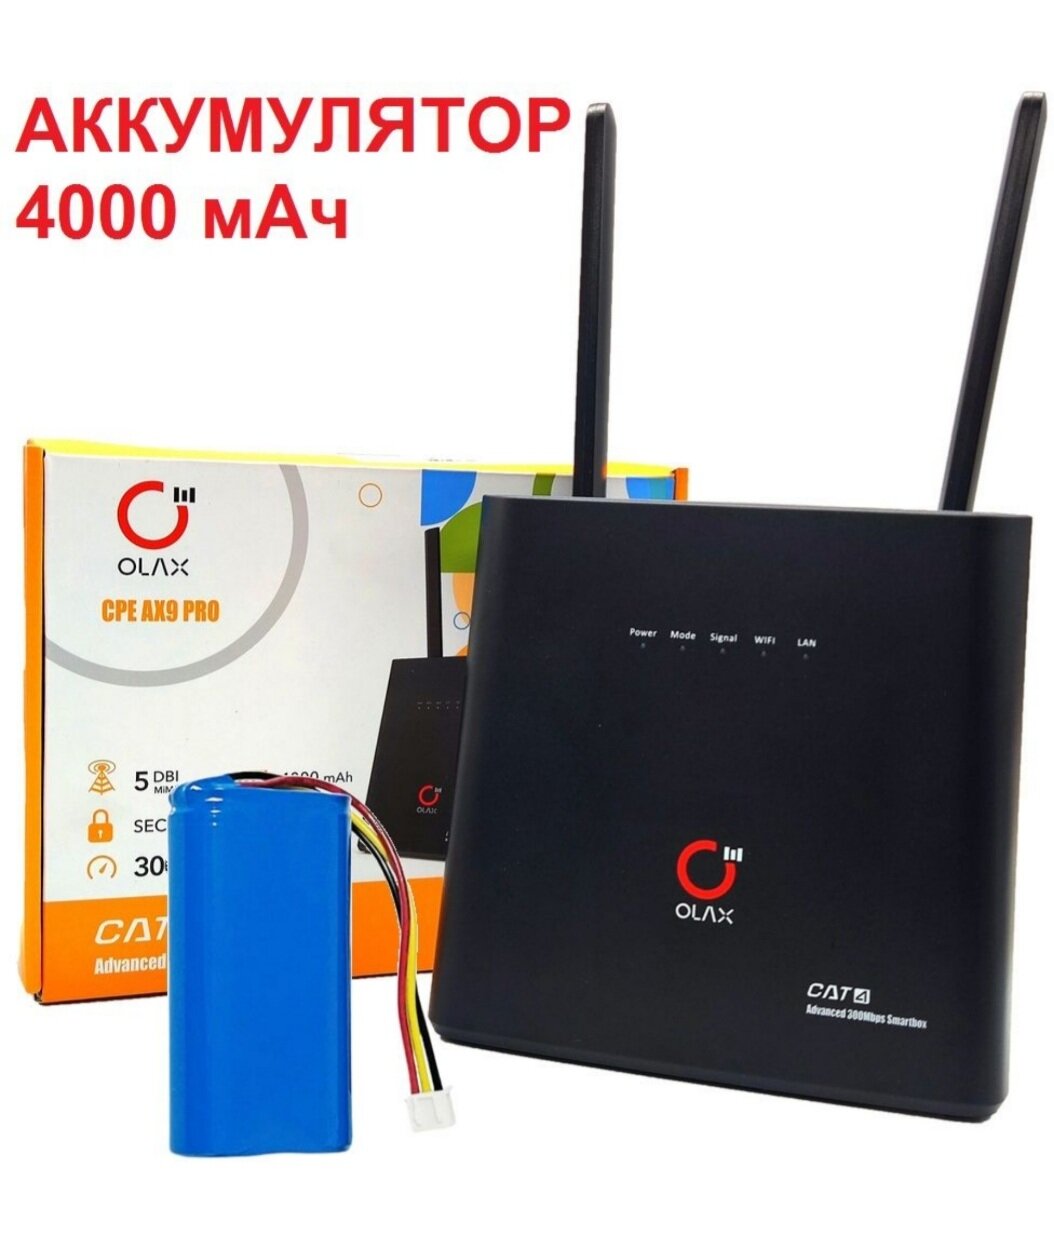 WiFi роутер Olax ax9pro-b маршрутизатор sim-модем imei TTL АКБ 4000мА.